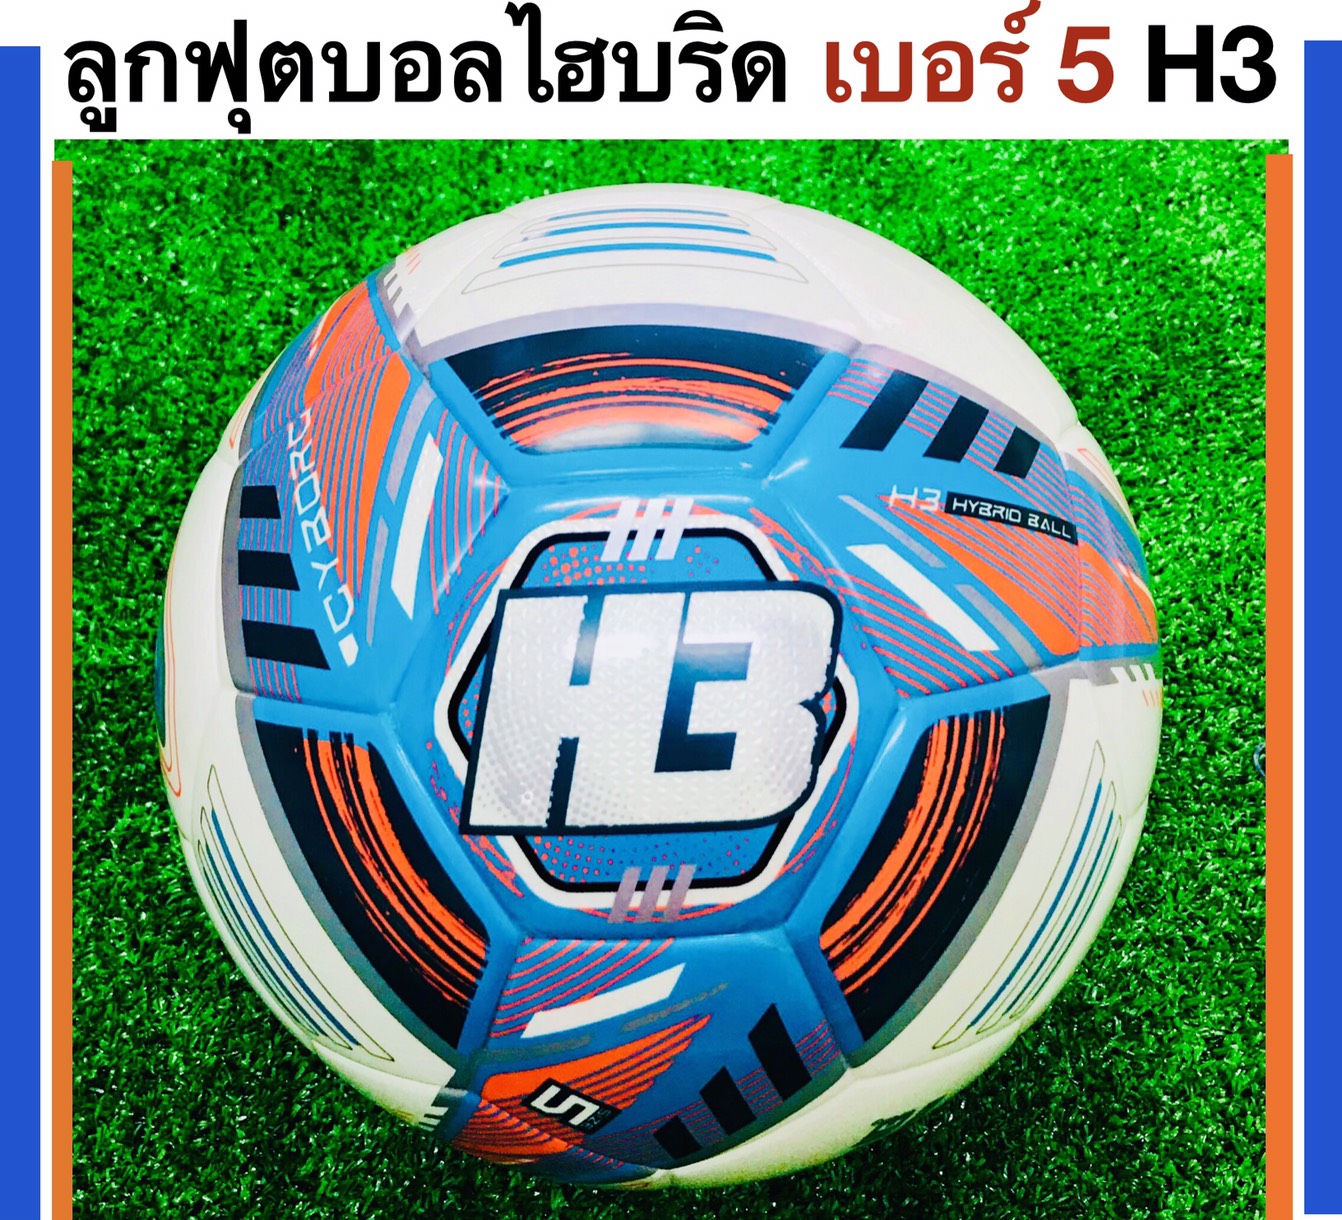 H3 ลูกฟุตบอลเอชทรี รุ่น CYBORG เบอร์ 5 ไฮบริด H3 HYBRID FOOTBALL รุ่นใหม่ล่าสุด